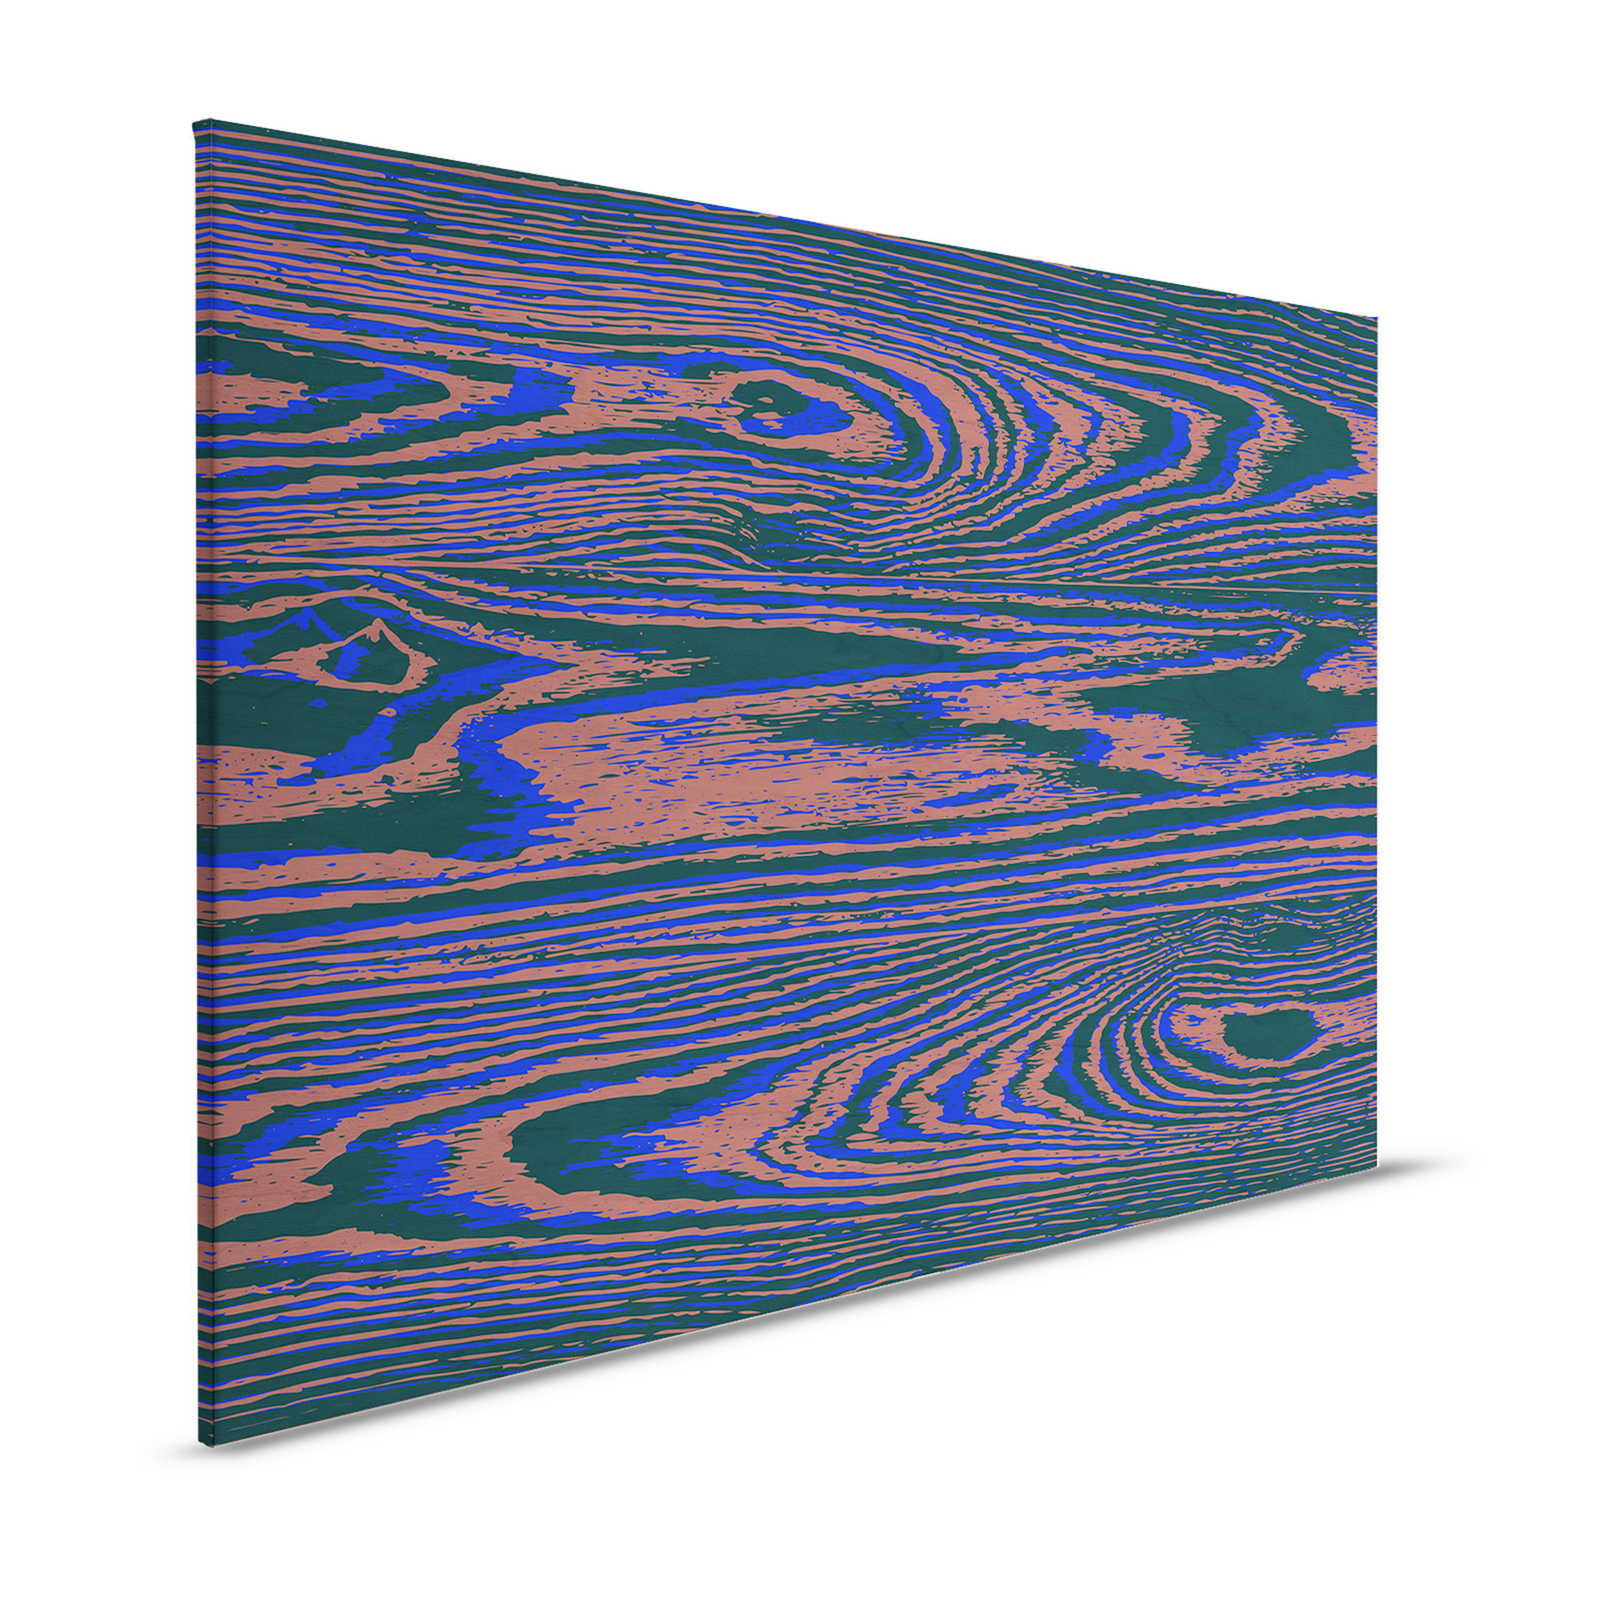 Kontiki 3 - Canvas painting Neon Wood Grain, Purple & Black - 1.20 m x 0.80 m
